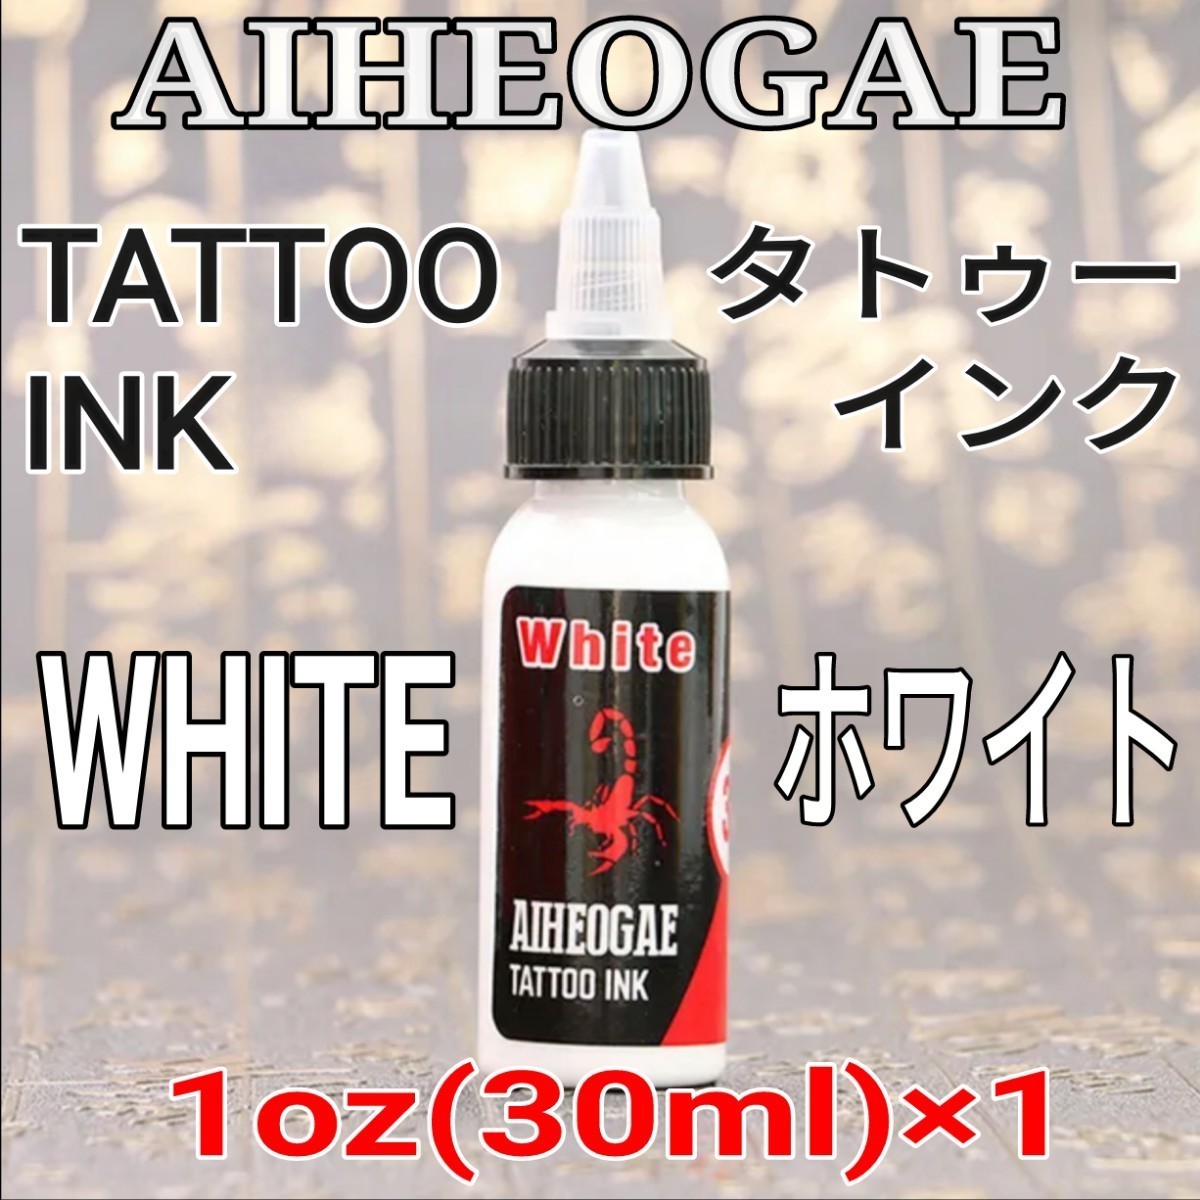 AIHEOGAE タトゥーインク white(ホワイト) 1oz(30ml)×1 ☆ 刺青 タトゥー マシン tattoo machine ☆_画像1